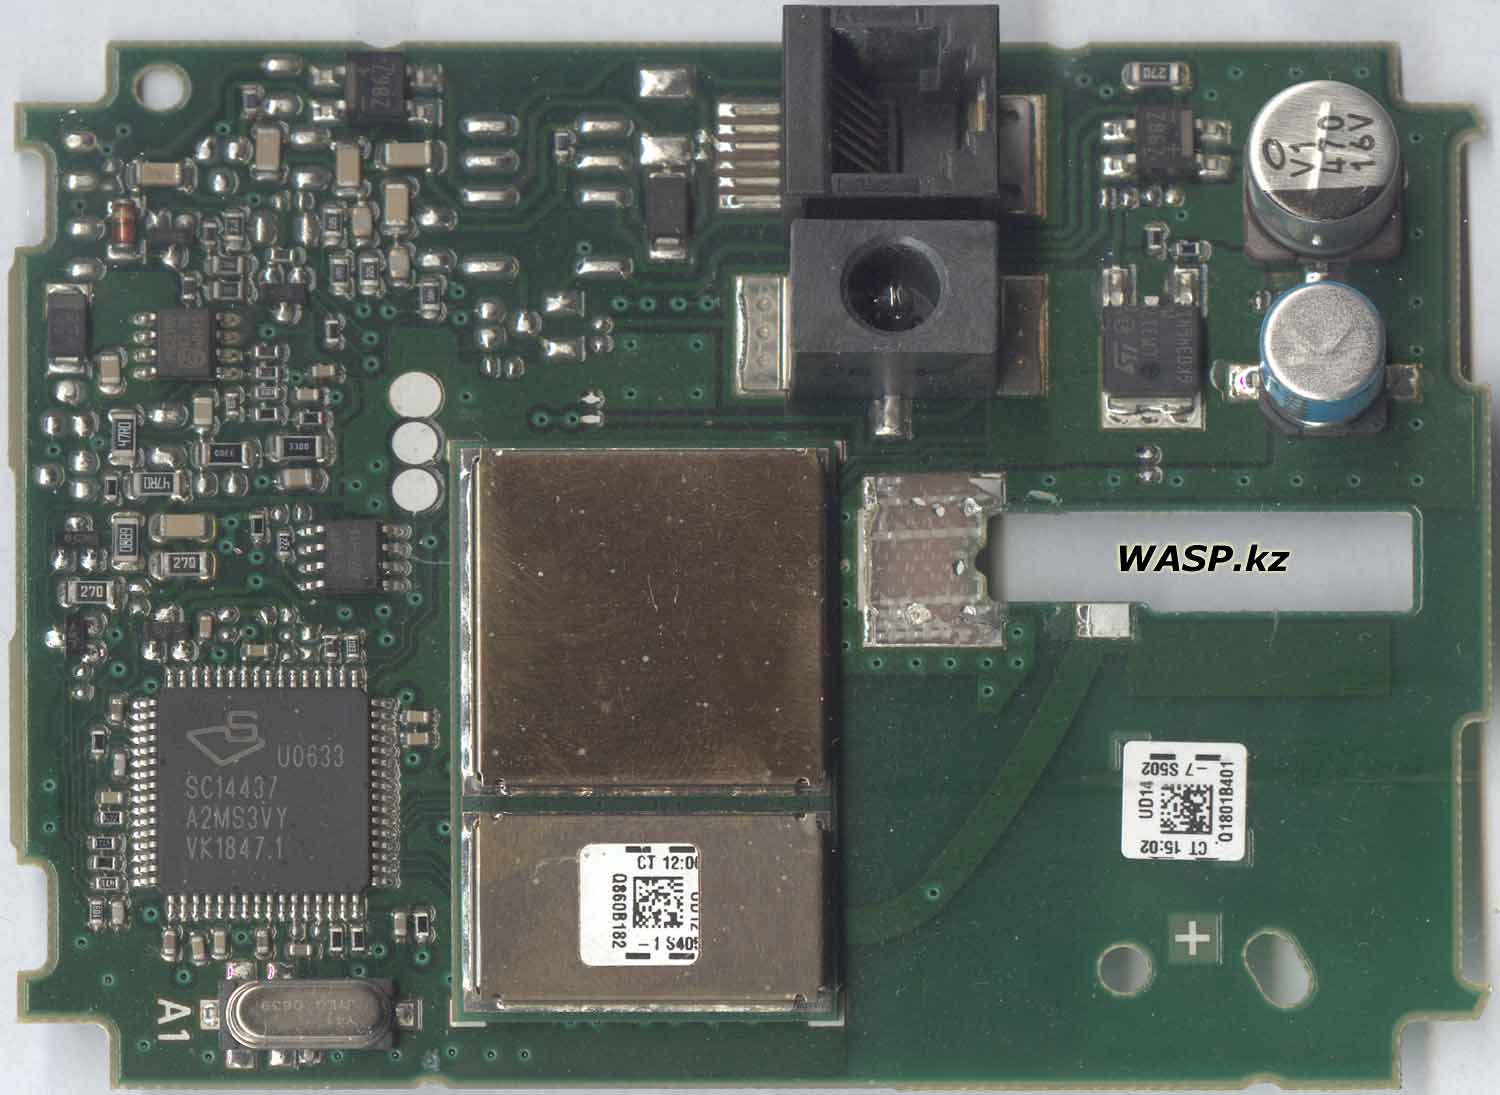 SC14437 A2MS3VY процессор в SIEMENS Gigaset A160